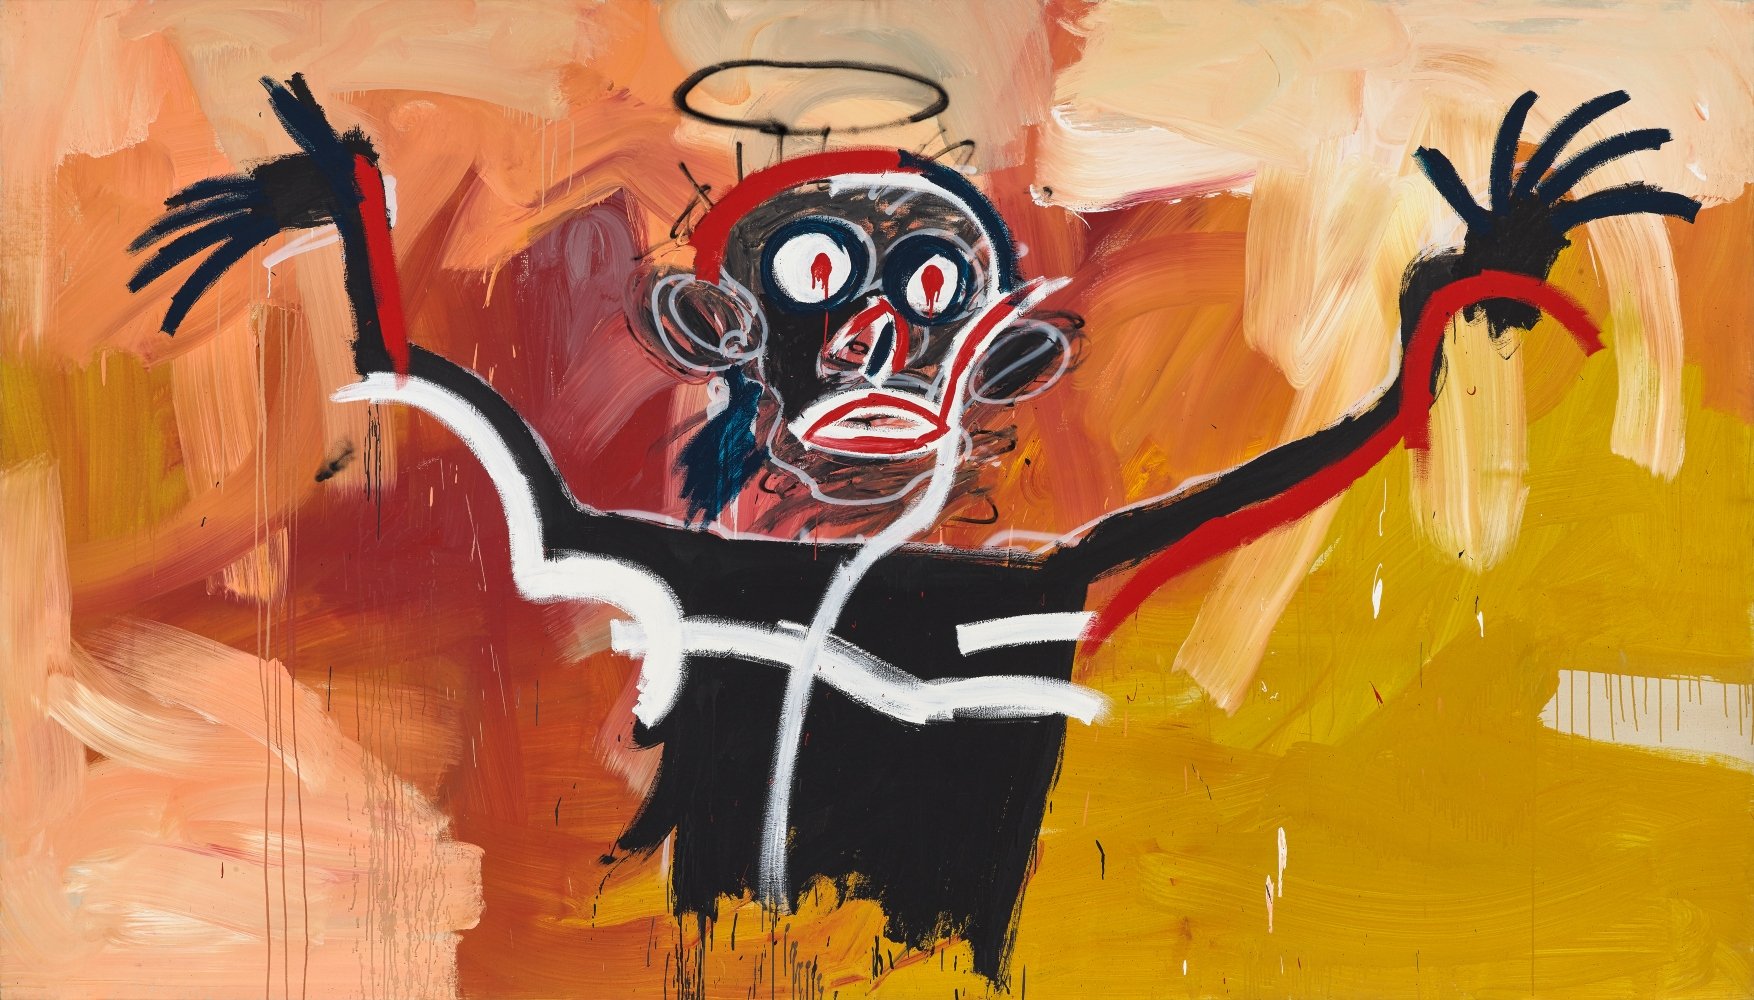 Dieter Buchhart on Basquiat x Warhol at Fondation Louis Vuitton, Advisory  Perspective